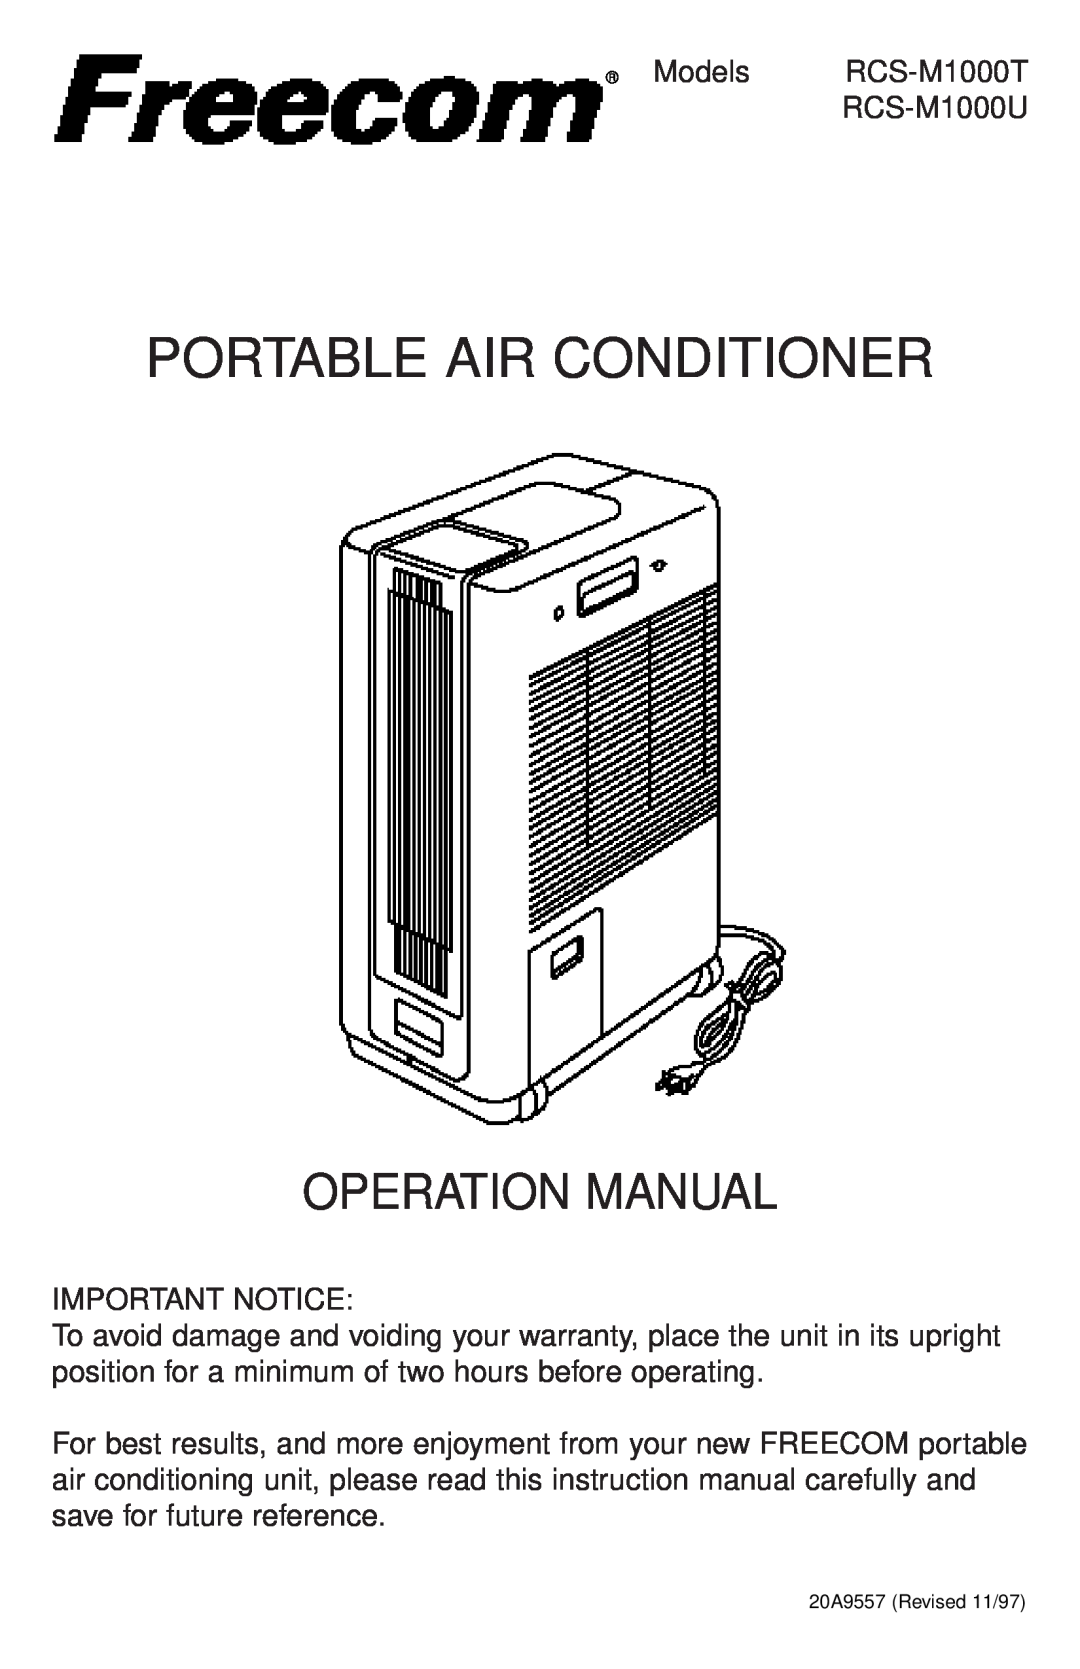 Freecom Technologies RCS-M1000T Models, RCS-M1000U, Important Notice, Portable Air Conditioner, 20A9557 Revised 11/97 